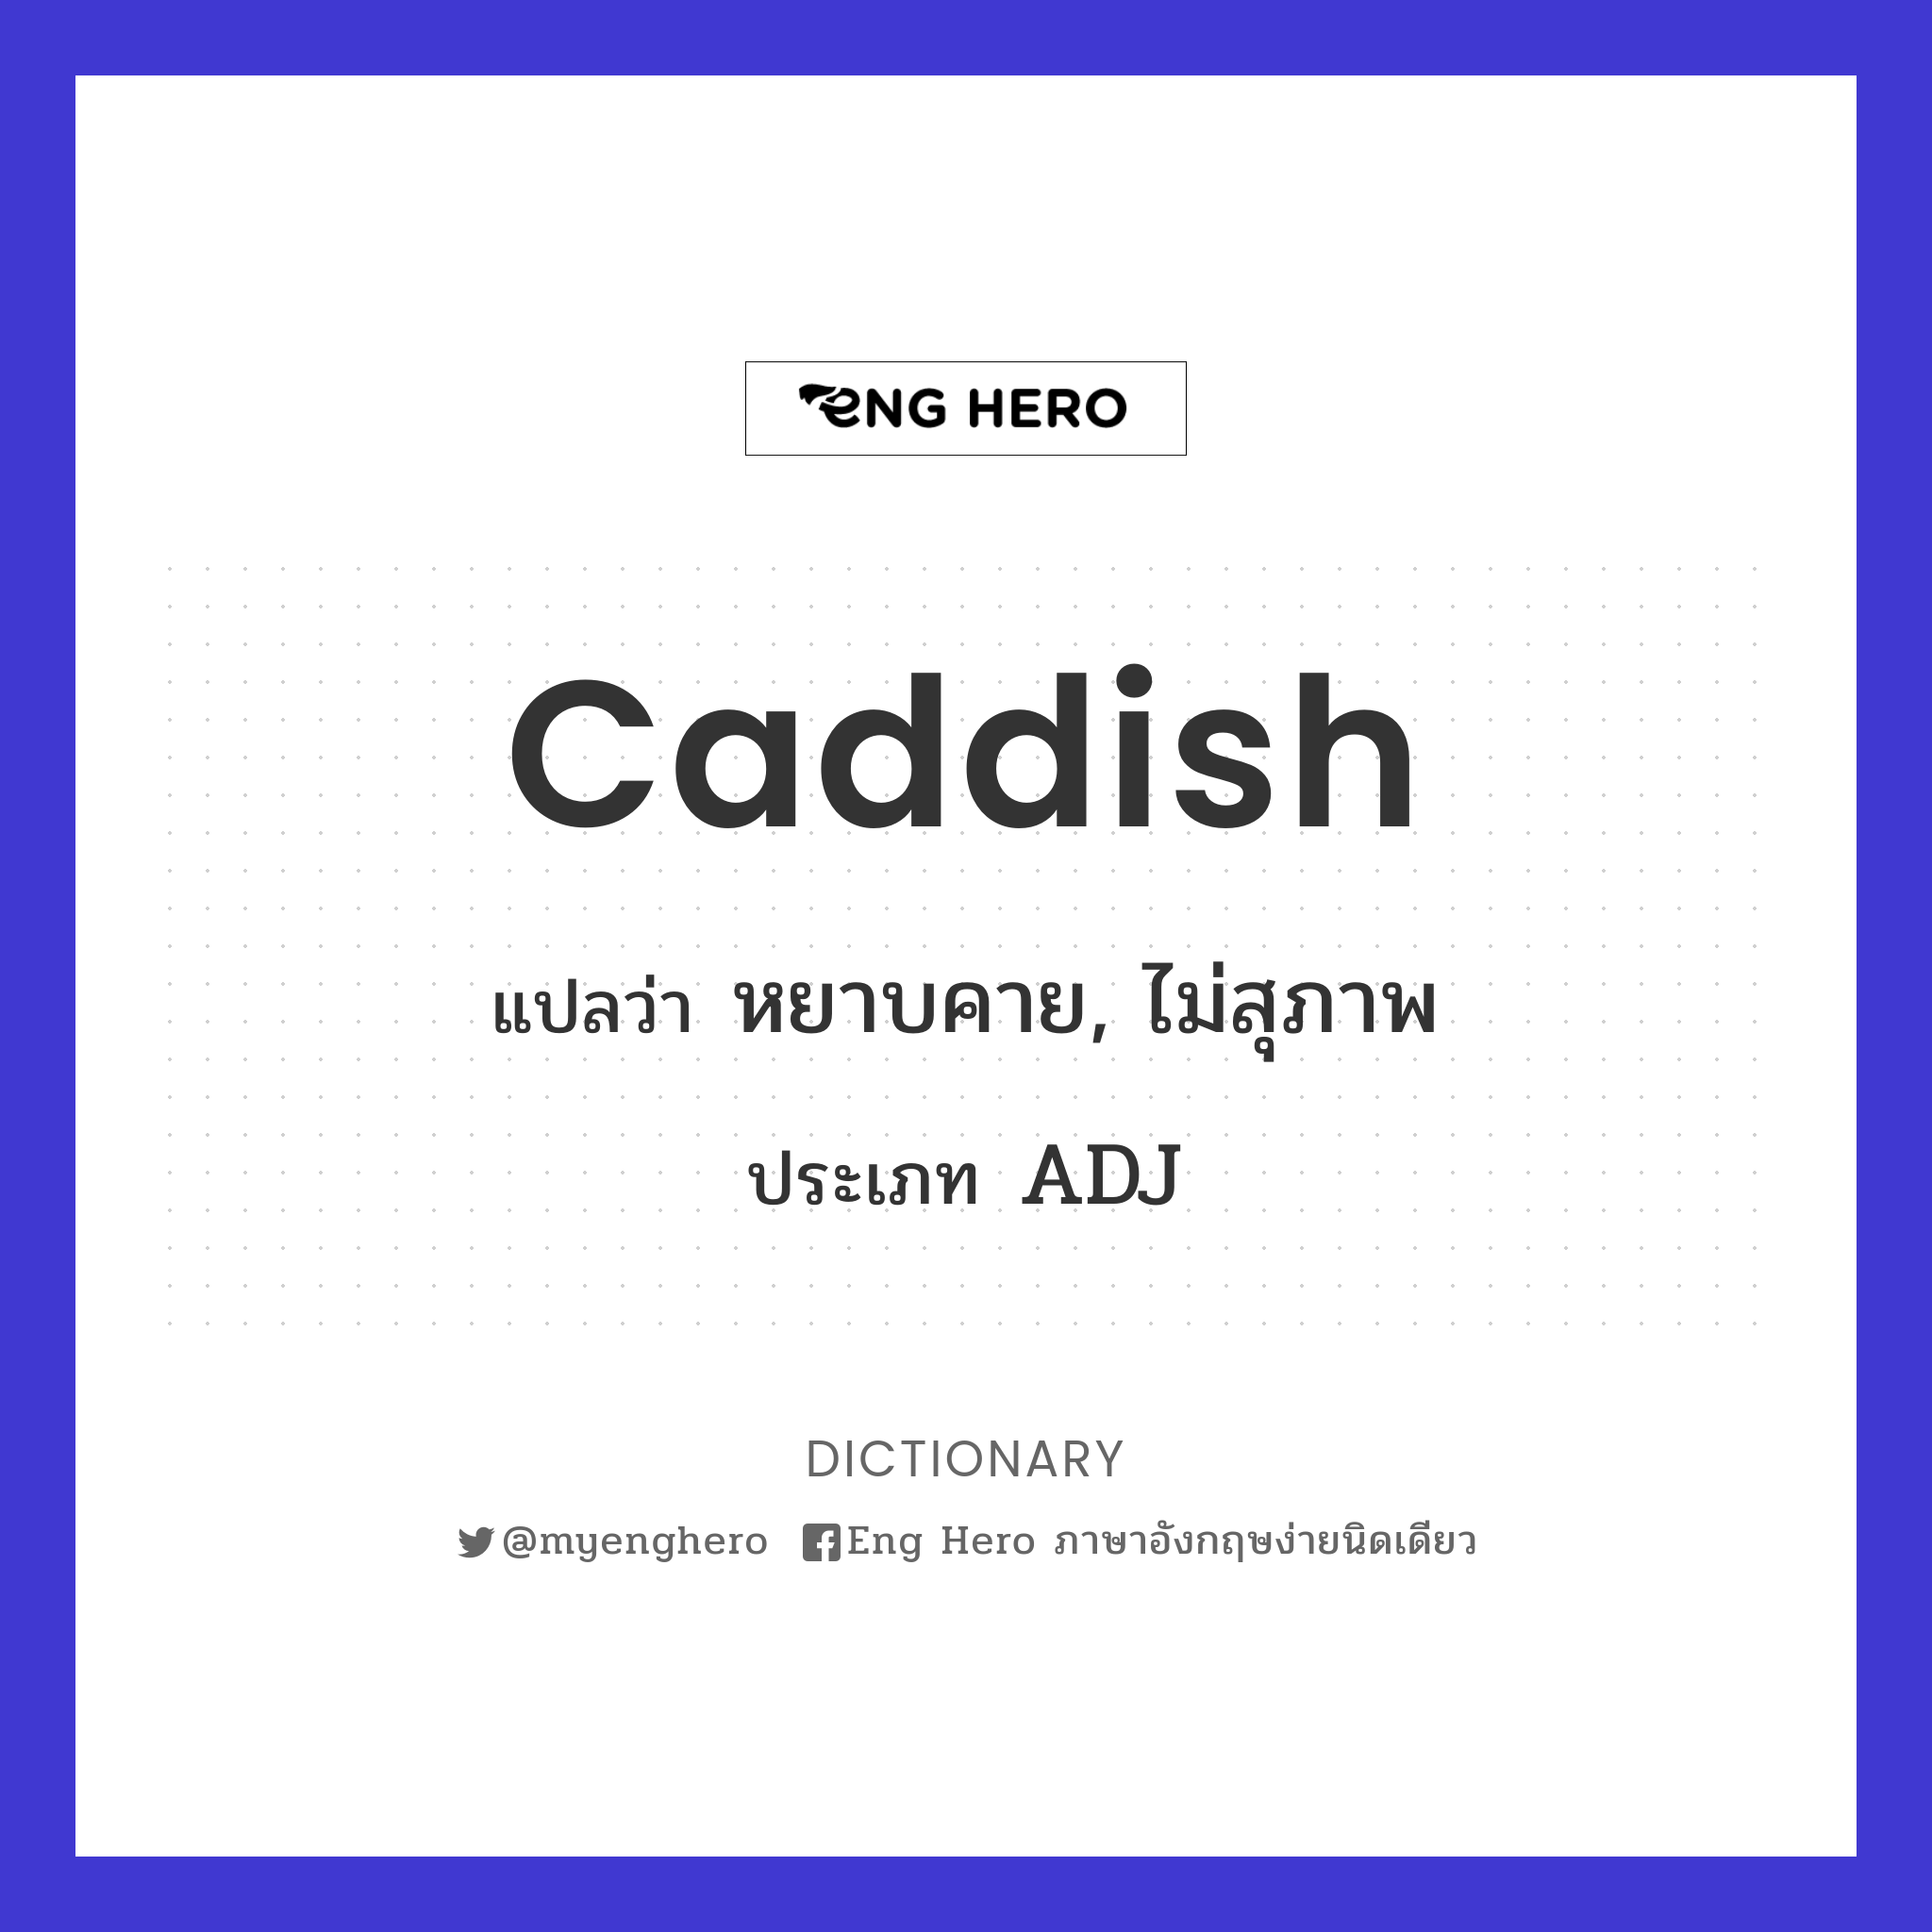 caddish